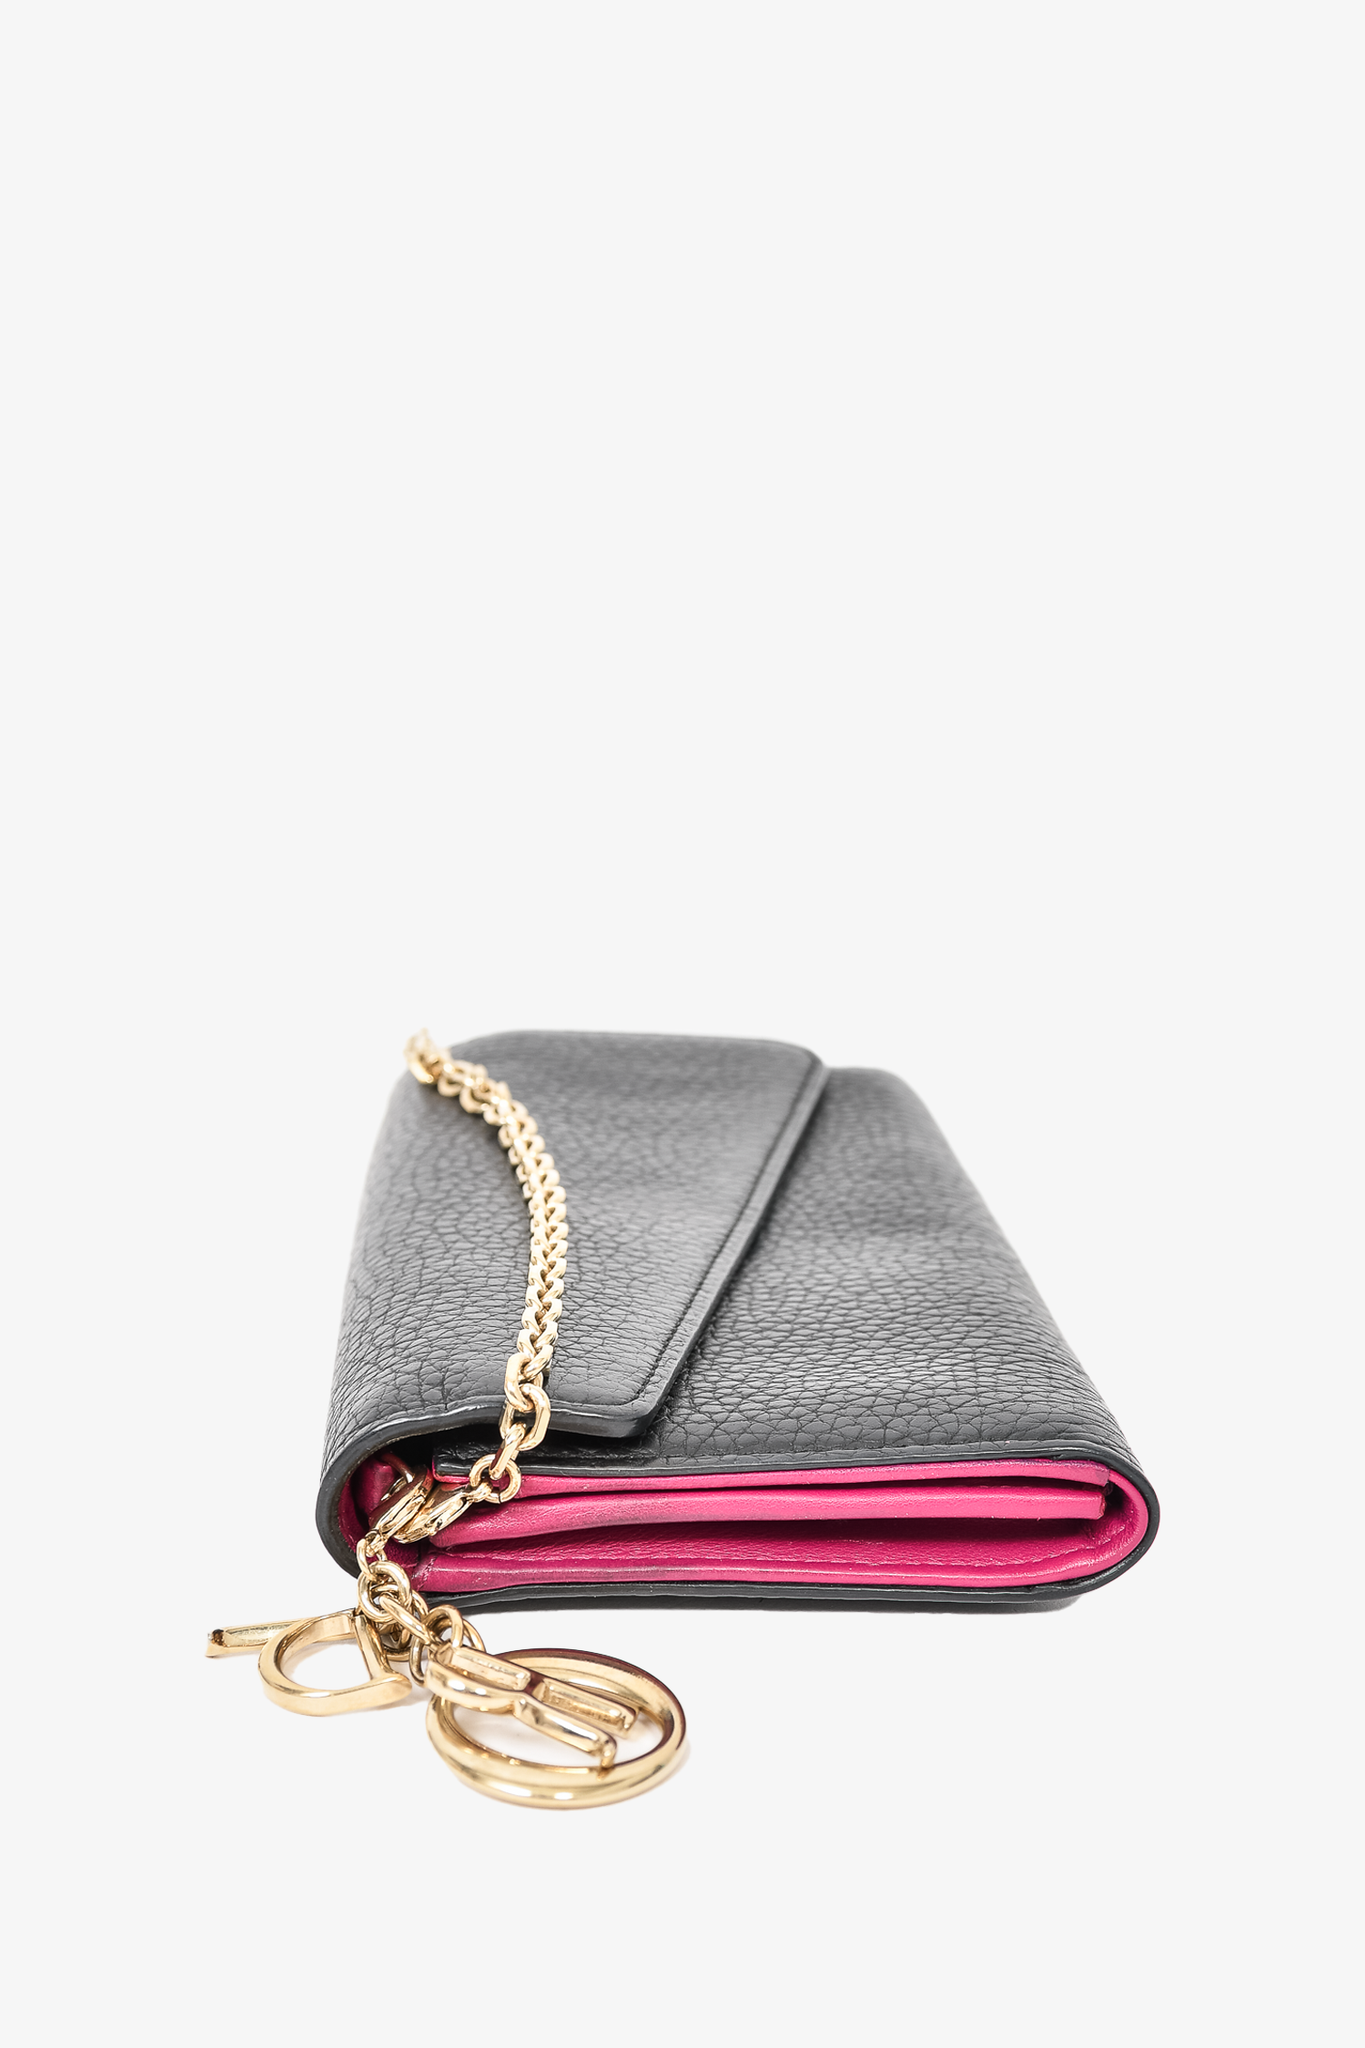 Christian Dior Black 'Diorissimo Rencontre' Wallet on Chain